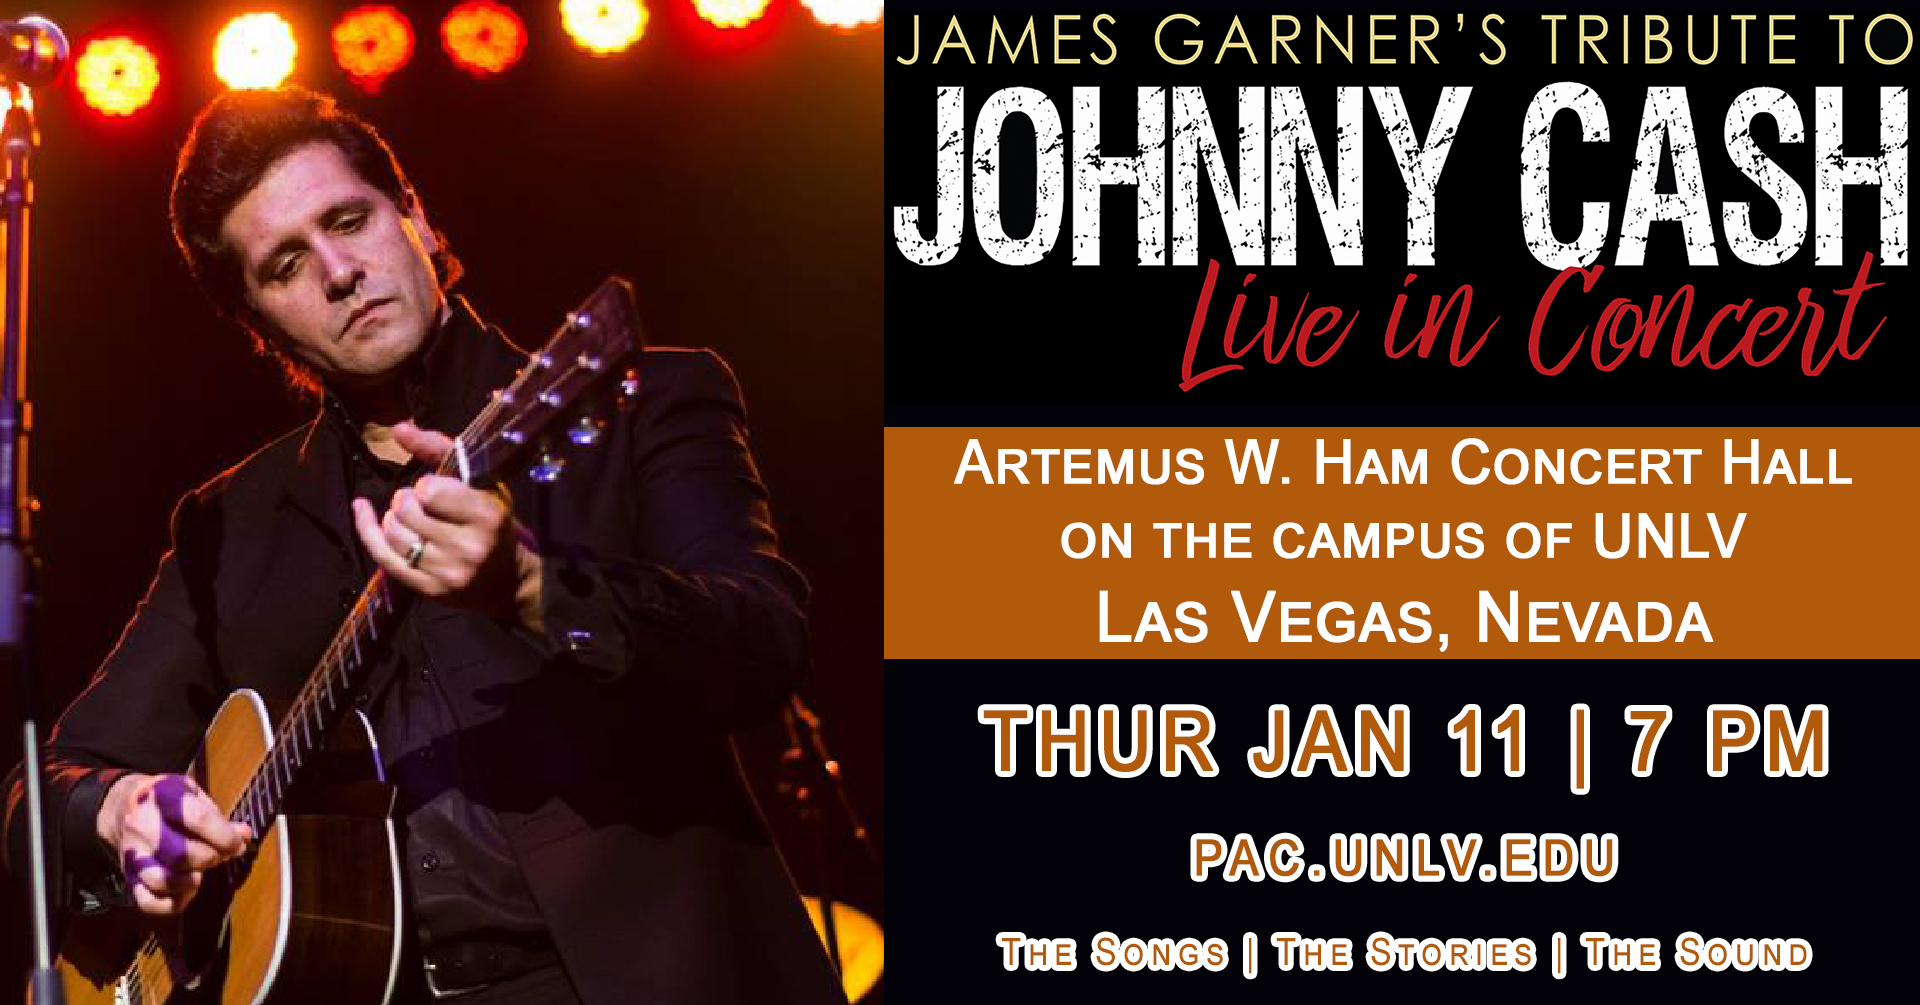 James Garner's Tribute to Johnny Cash, Las Vegas, Nevada, United States